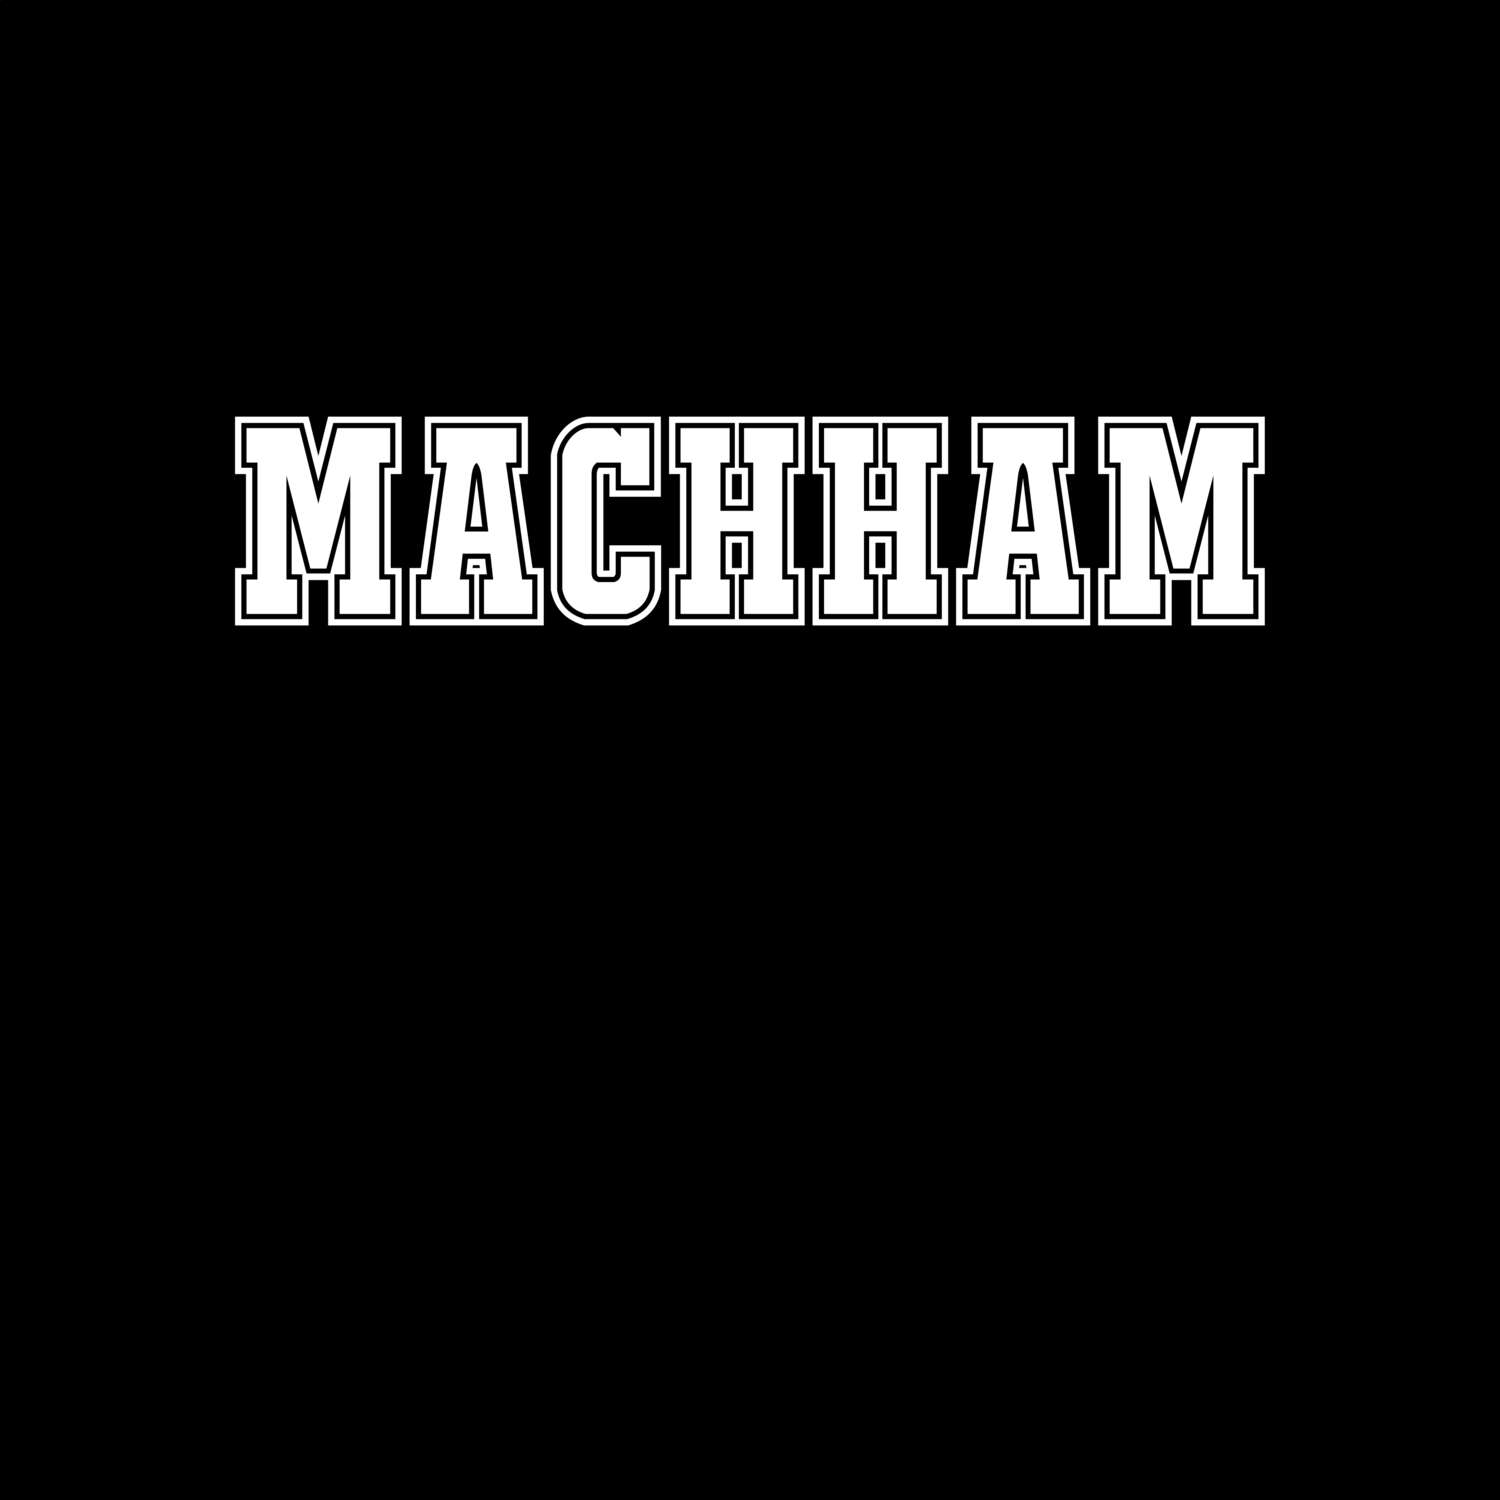 Machham T-Shirt »Classic«